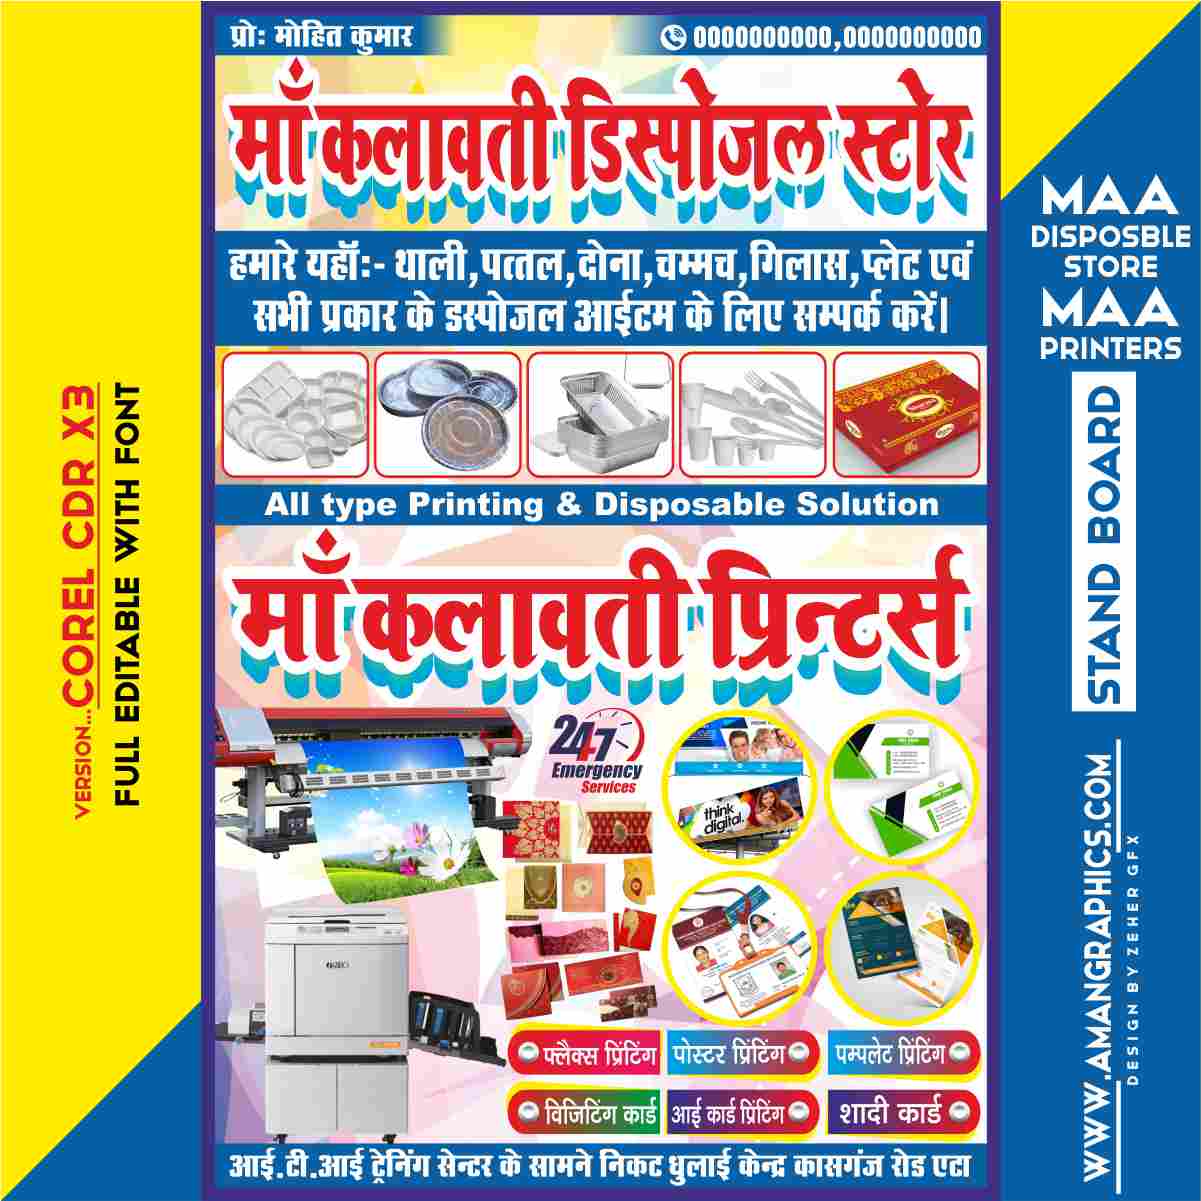 Maa Kalawati Disposable Store And Printers Banner Design Cdr FIle